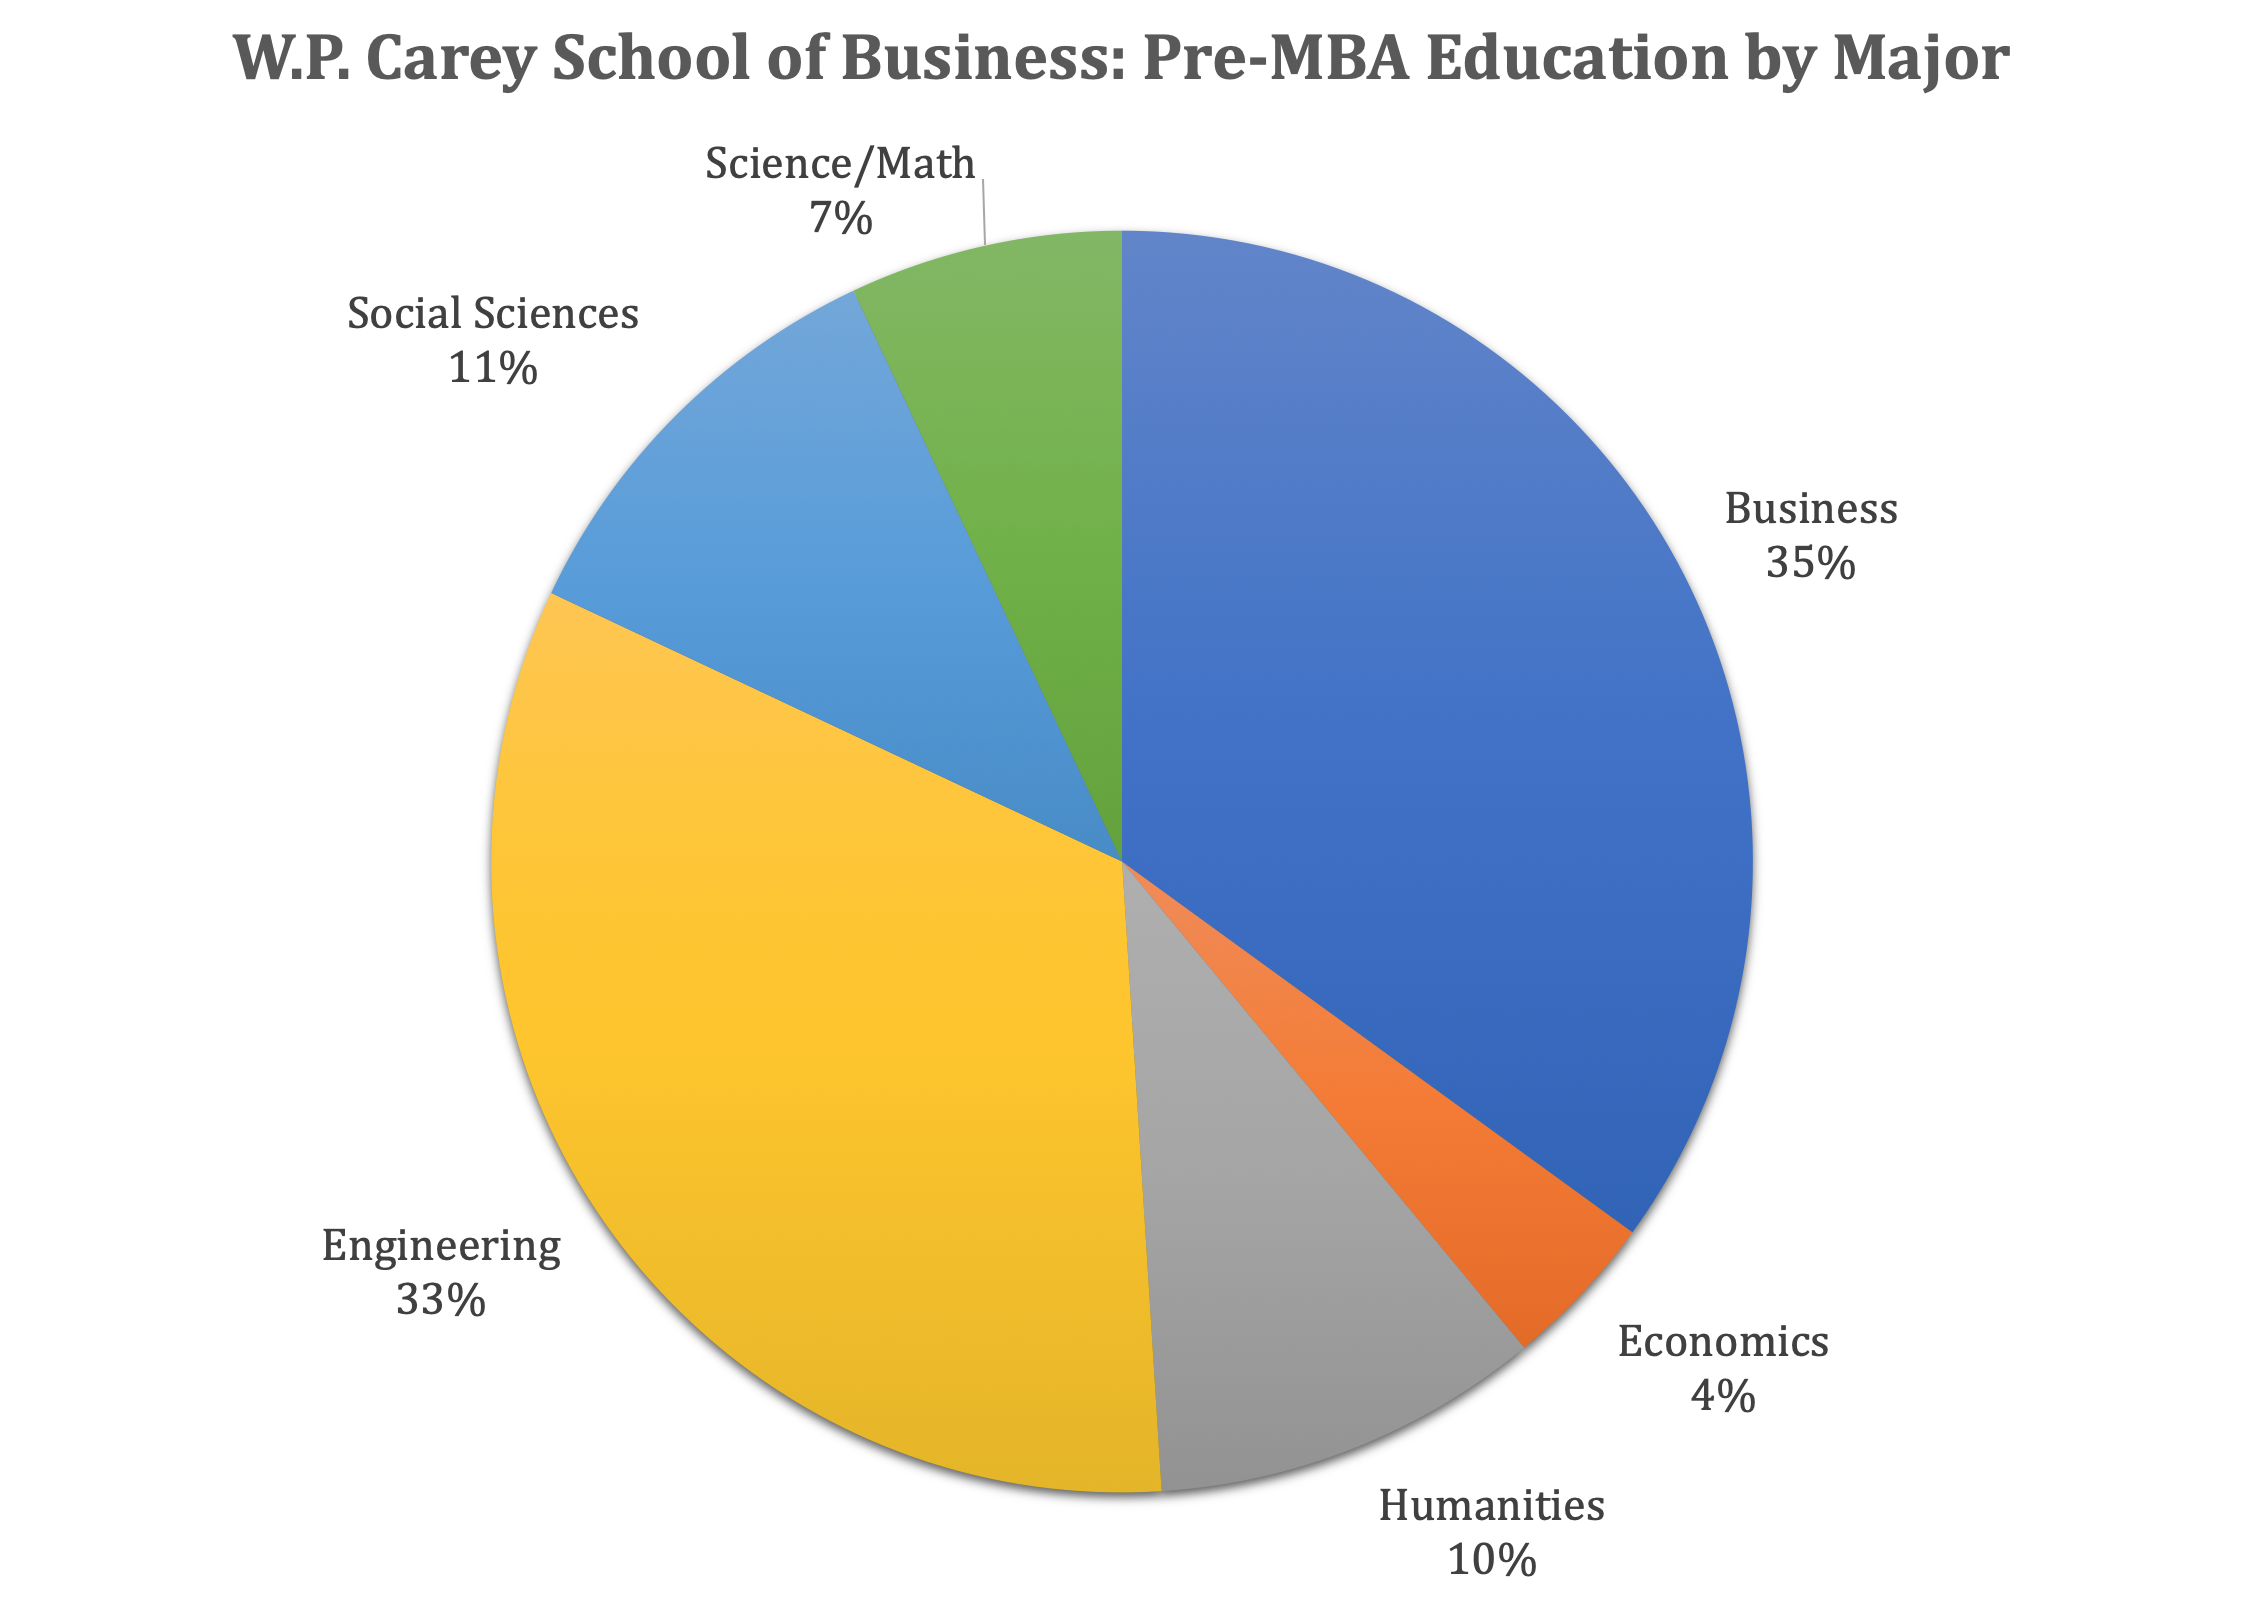 ASU MBA Program - W.P. Carey School of Business - Pre-MBA Major